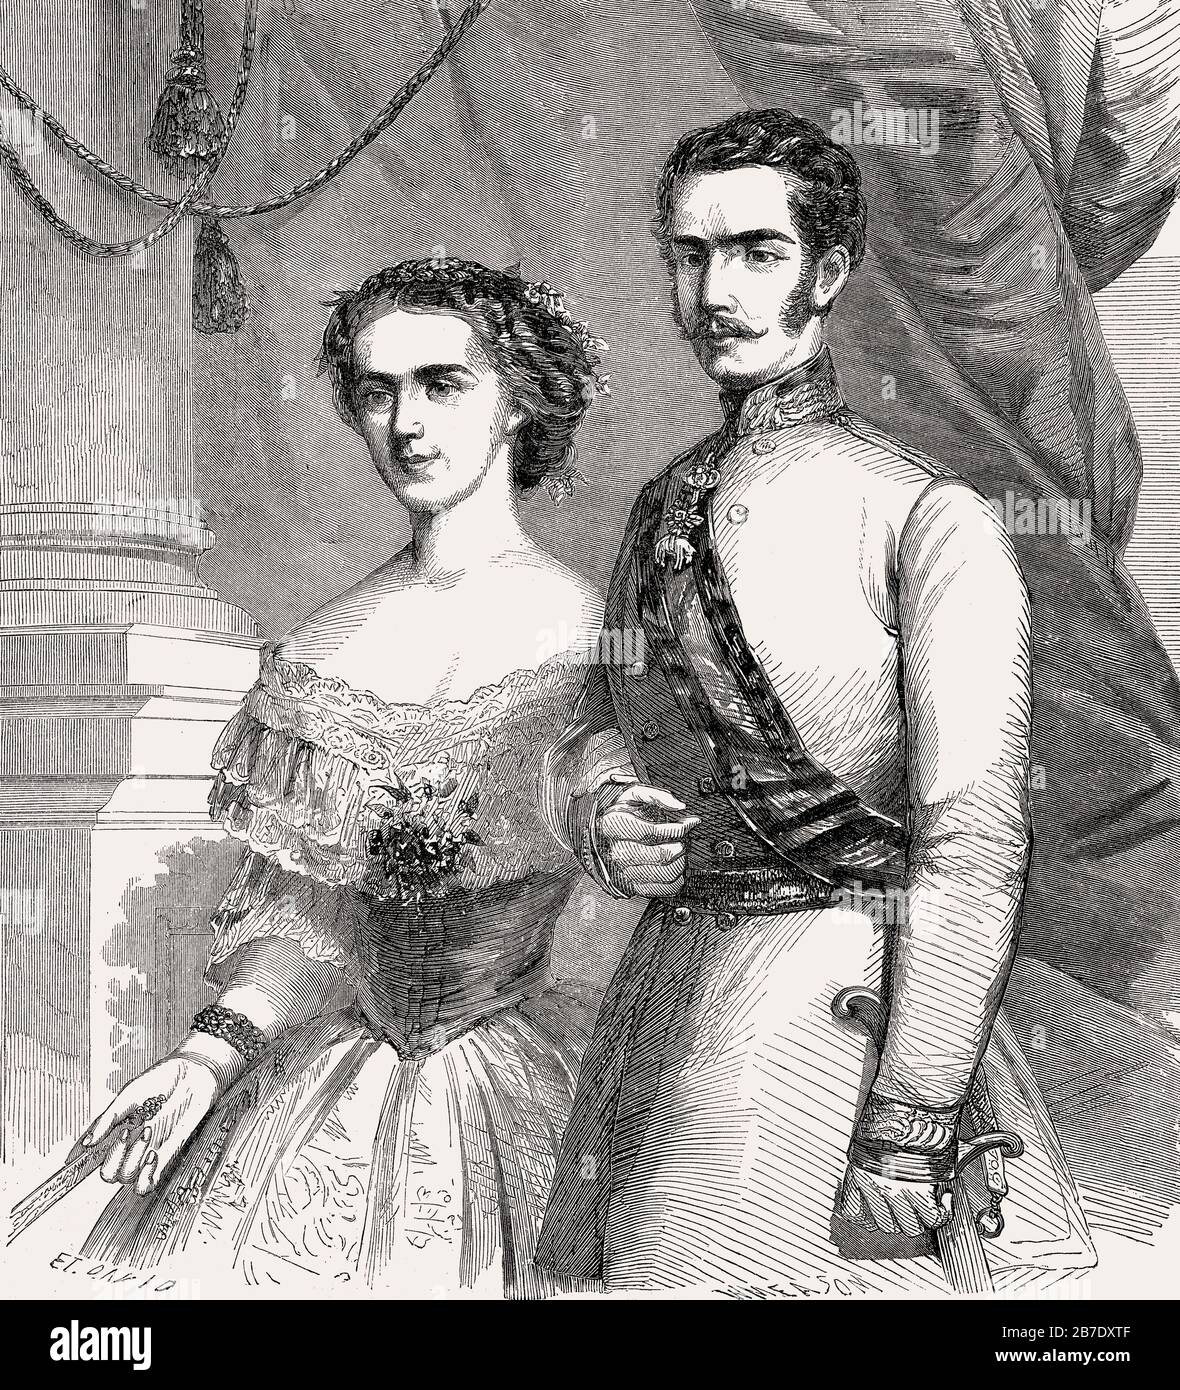 Franz Joseph I, Emperor of Austria, with Empress Elisabeth of Austria, called Sissi, 1857 Stock Photo